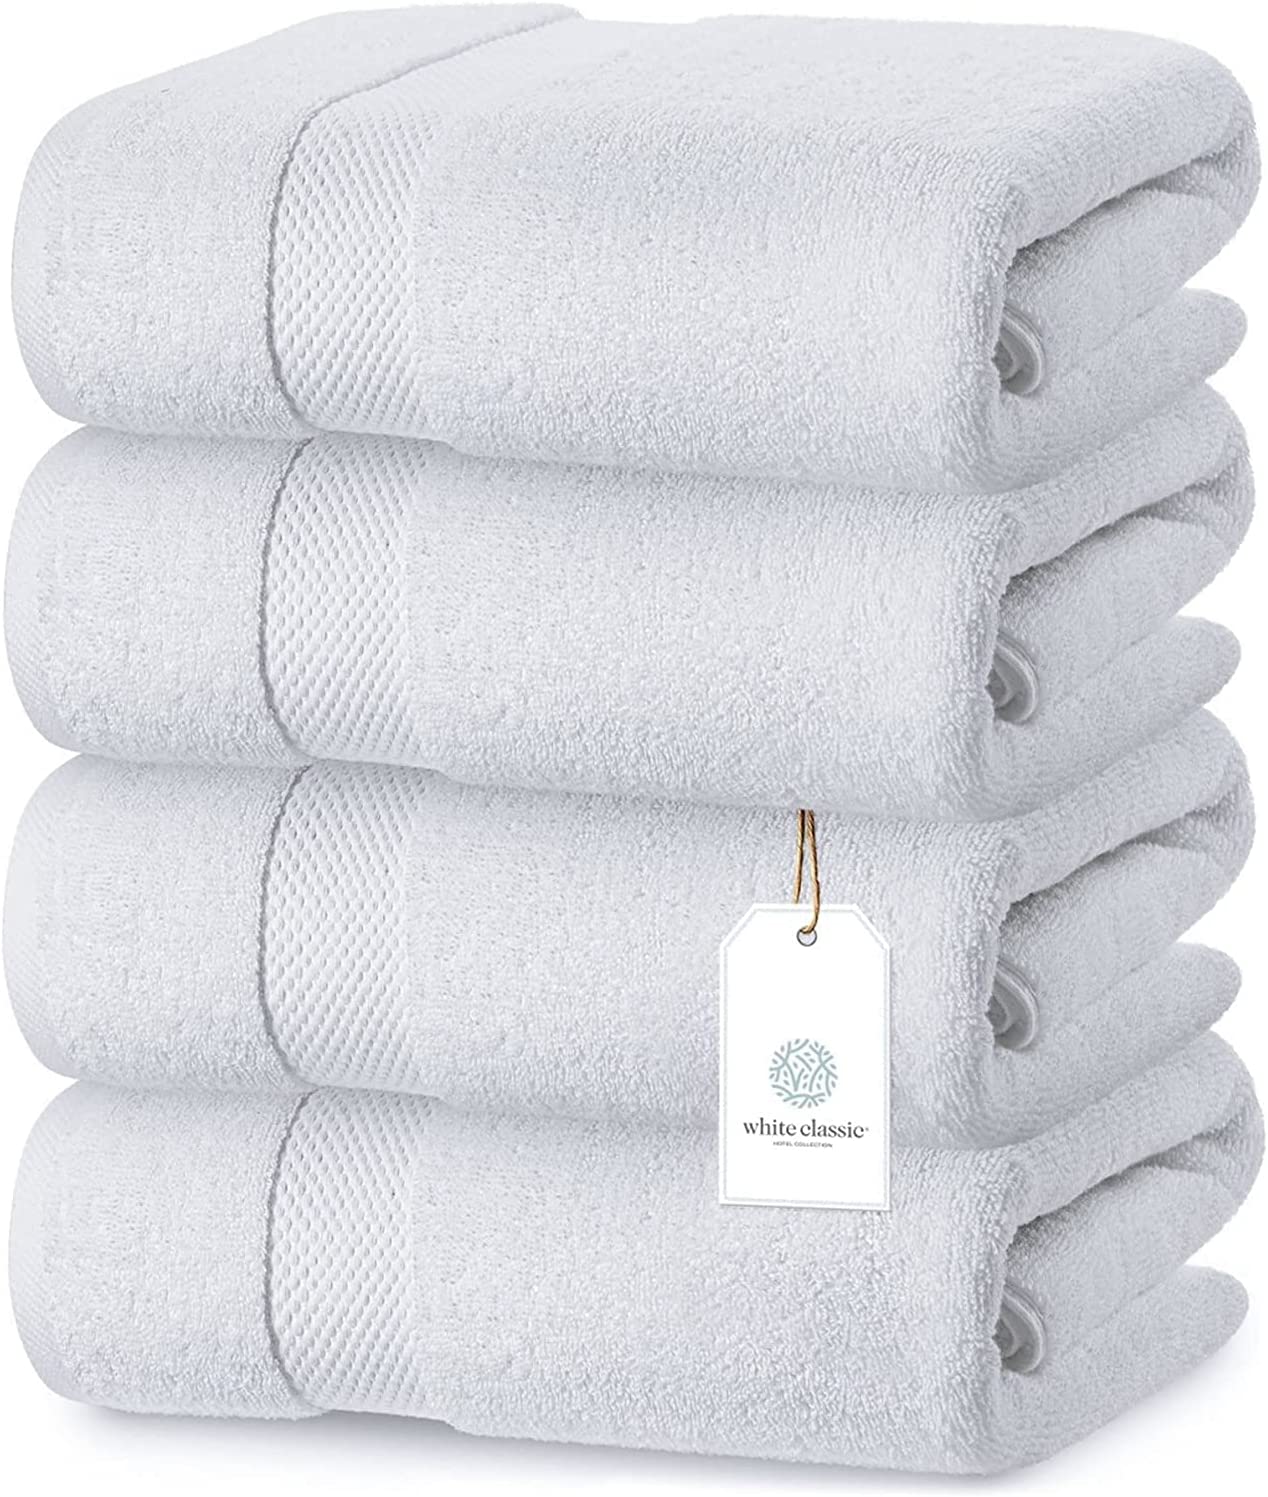 https://www.dontwasteyourmoney.com/wp-content/uploads/2020/08/white-classic-luxury-egyptian-cotton-towels-set-of-4.jpg